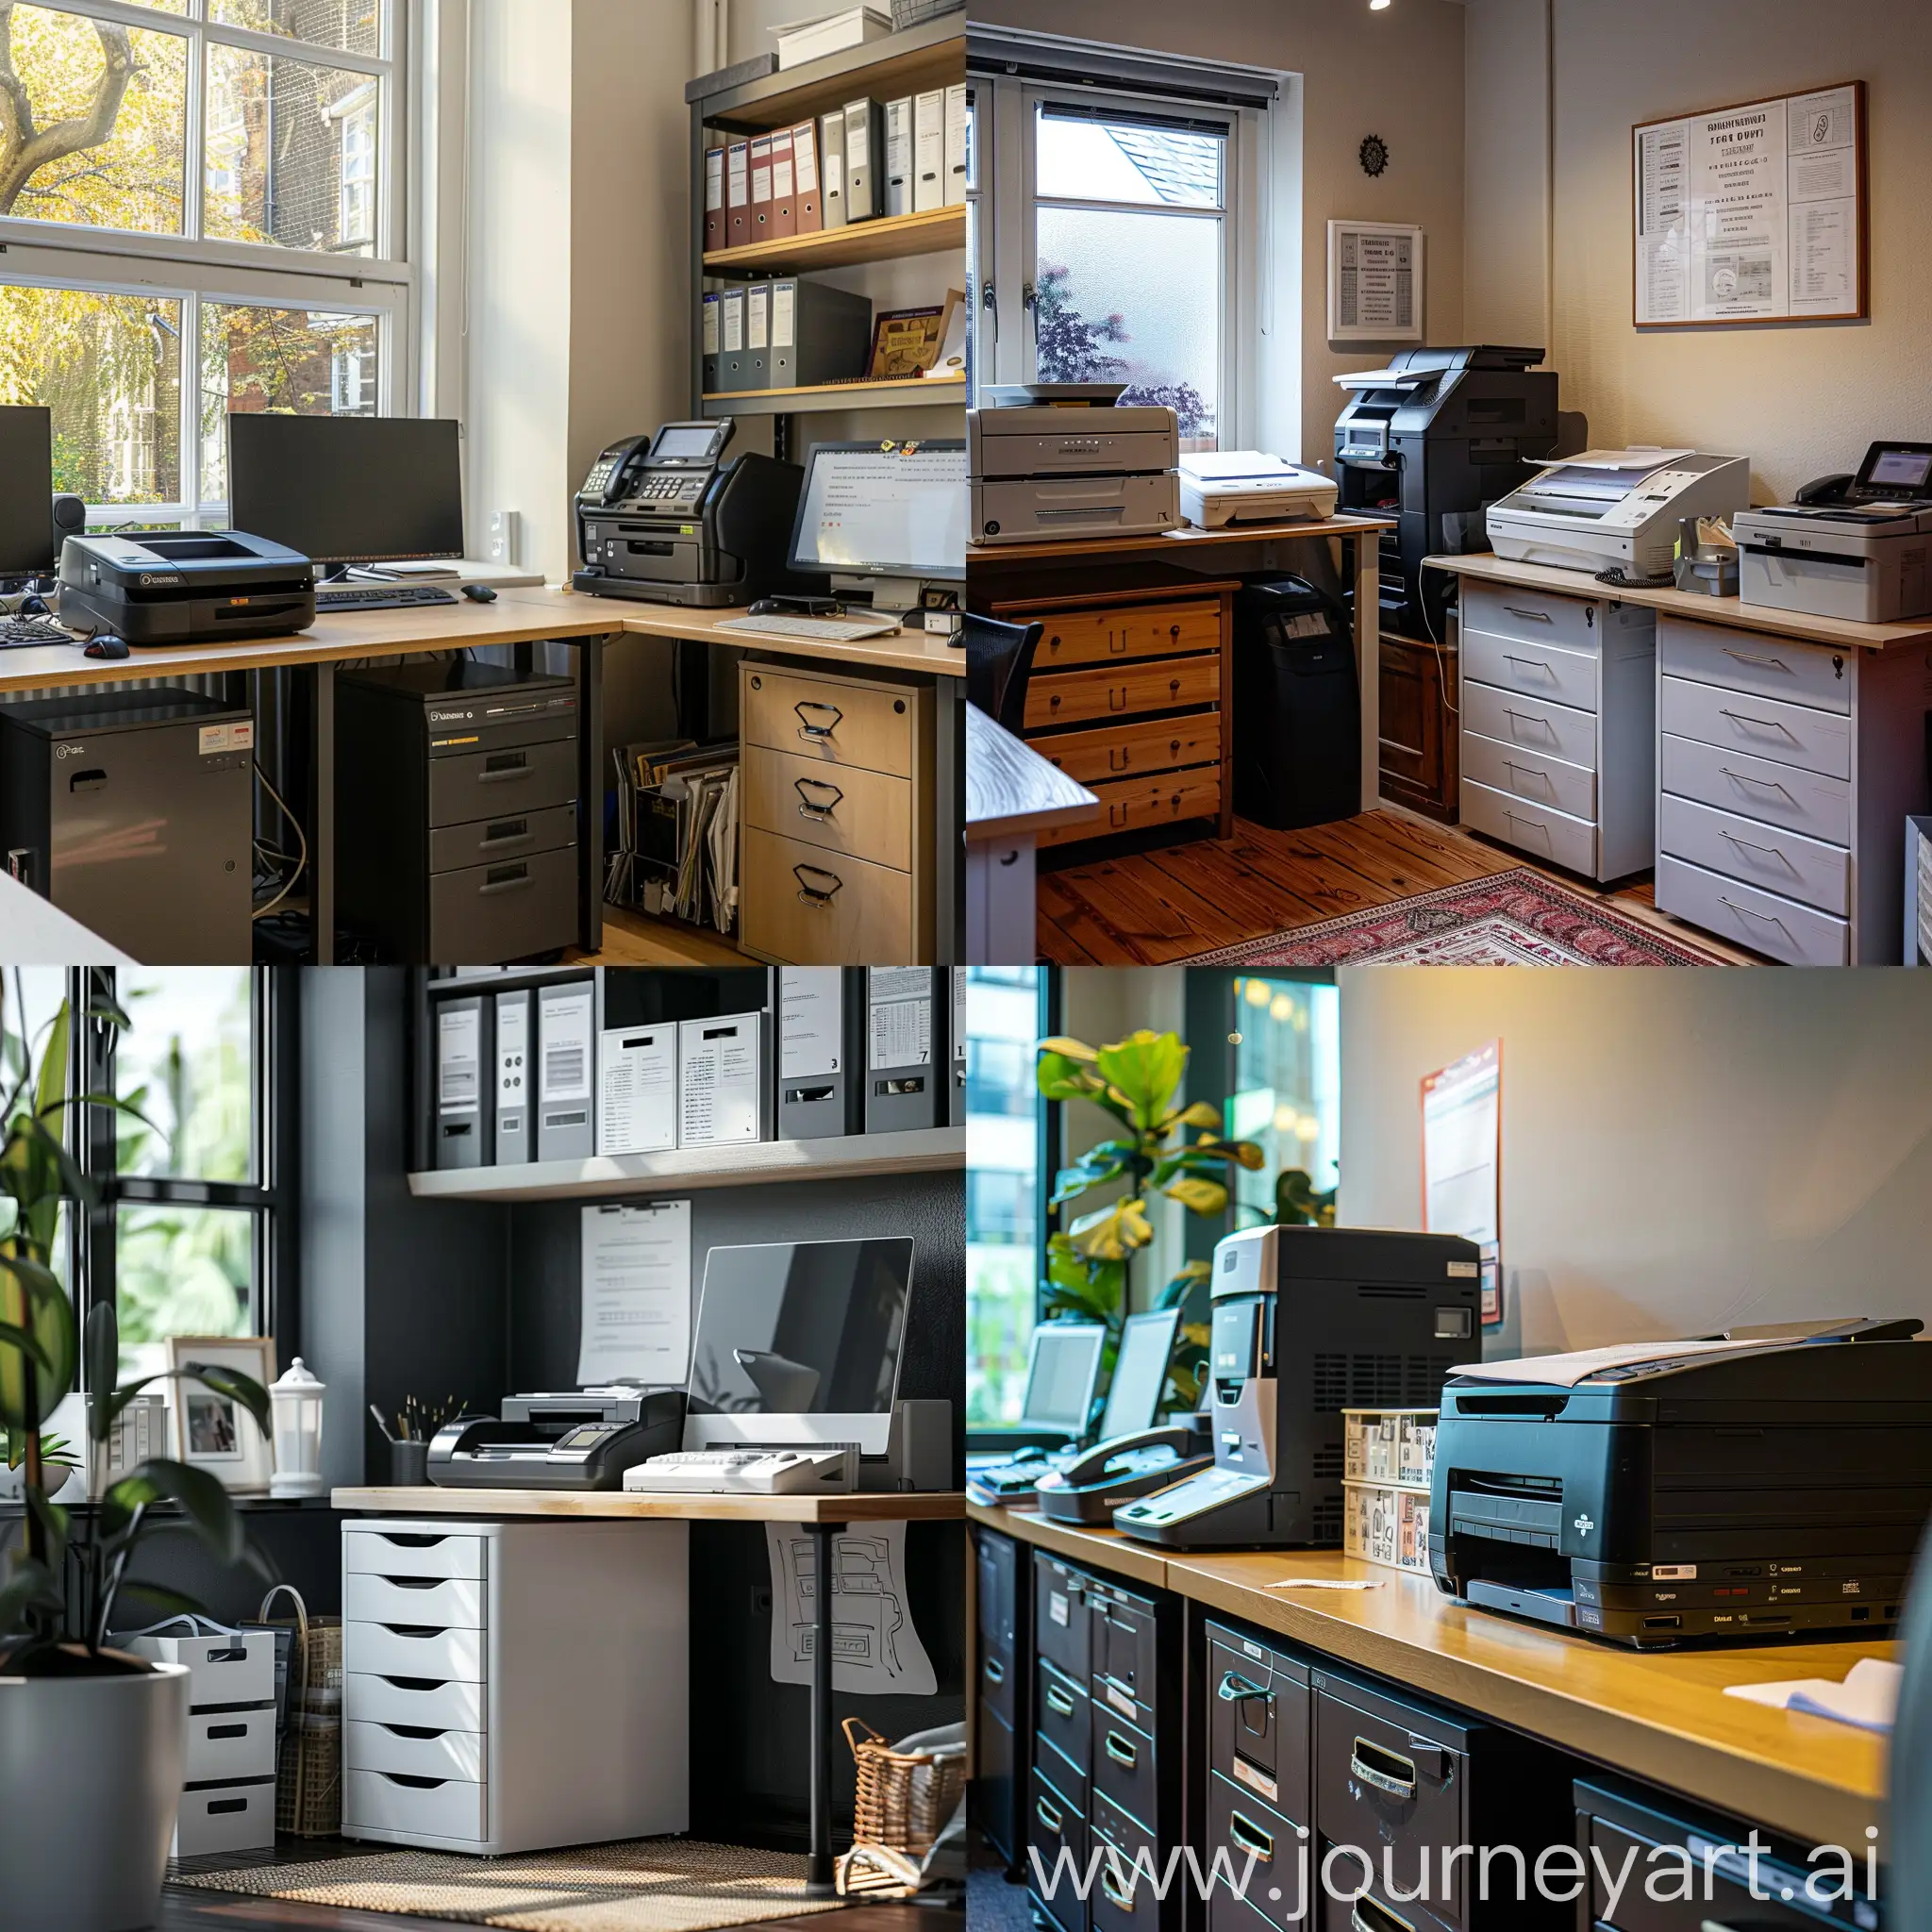 administration office, 2-4 workstations, storage area, photocopier, cozy space, warm colour palette, window